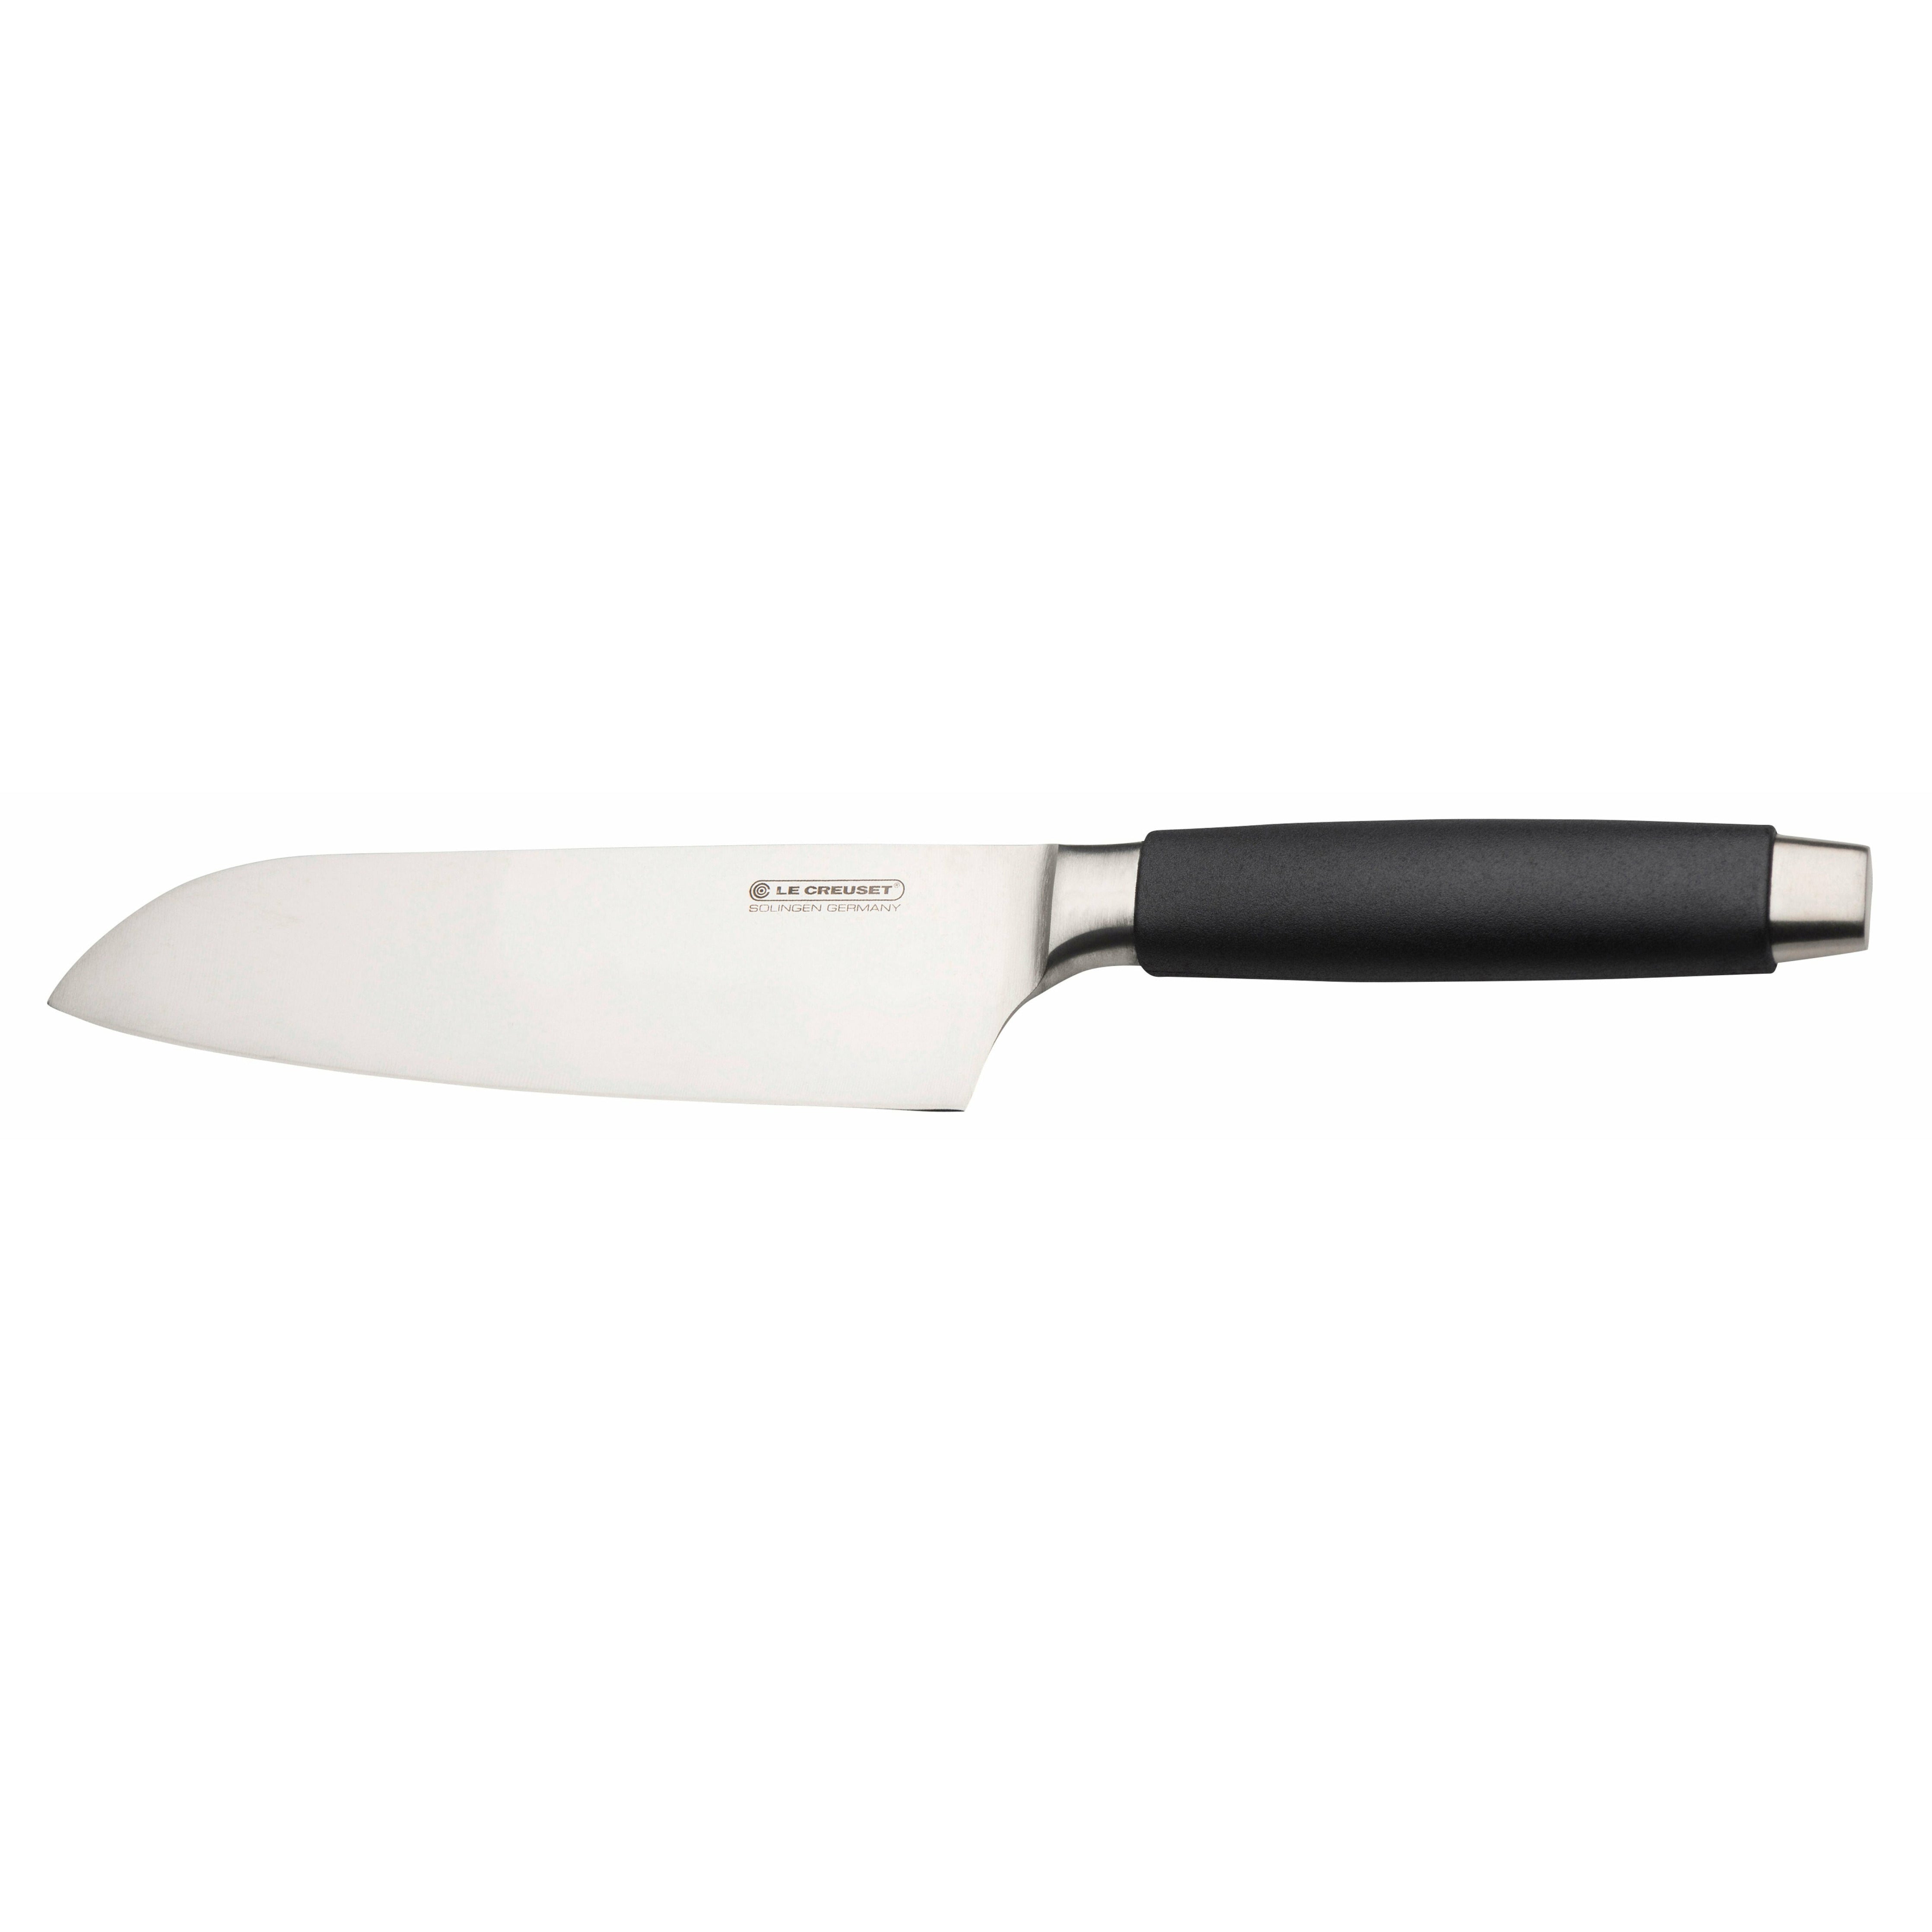 Le Creuset Santoku Knife Standard With Black Handle, 18 Cm